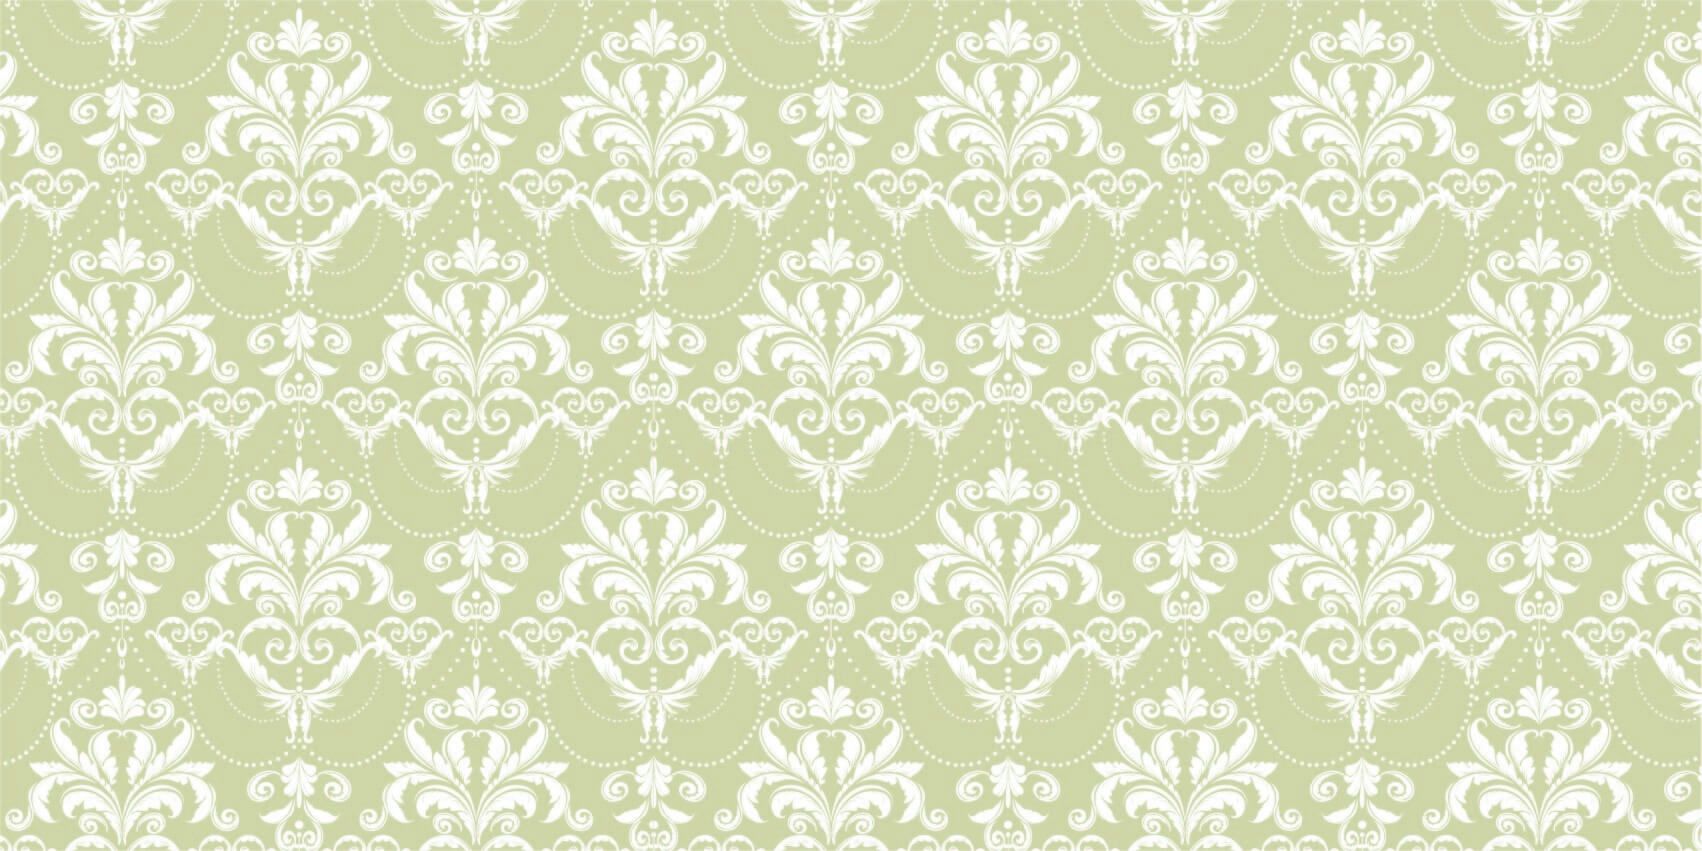 Baroque wallpaper - Classic pattern - Bedroom